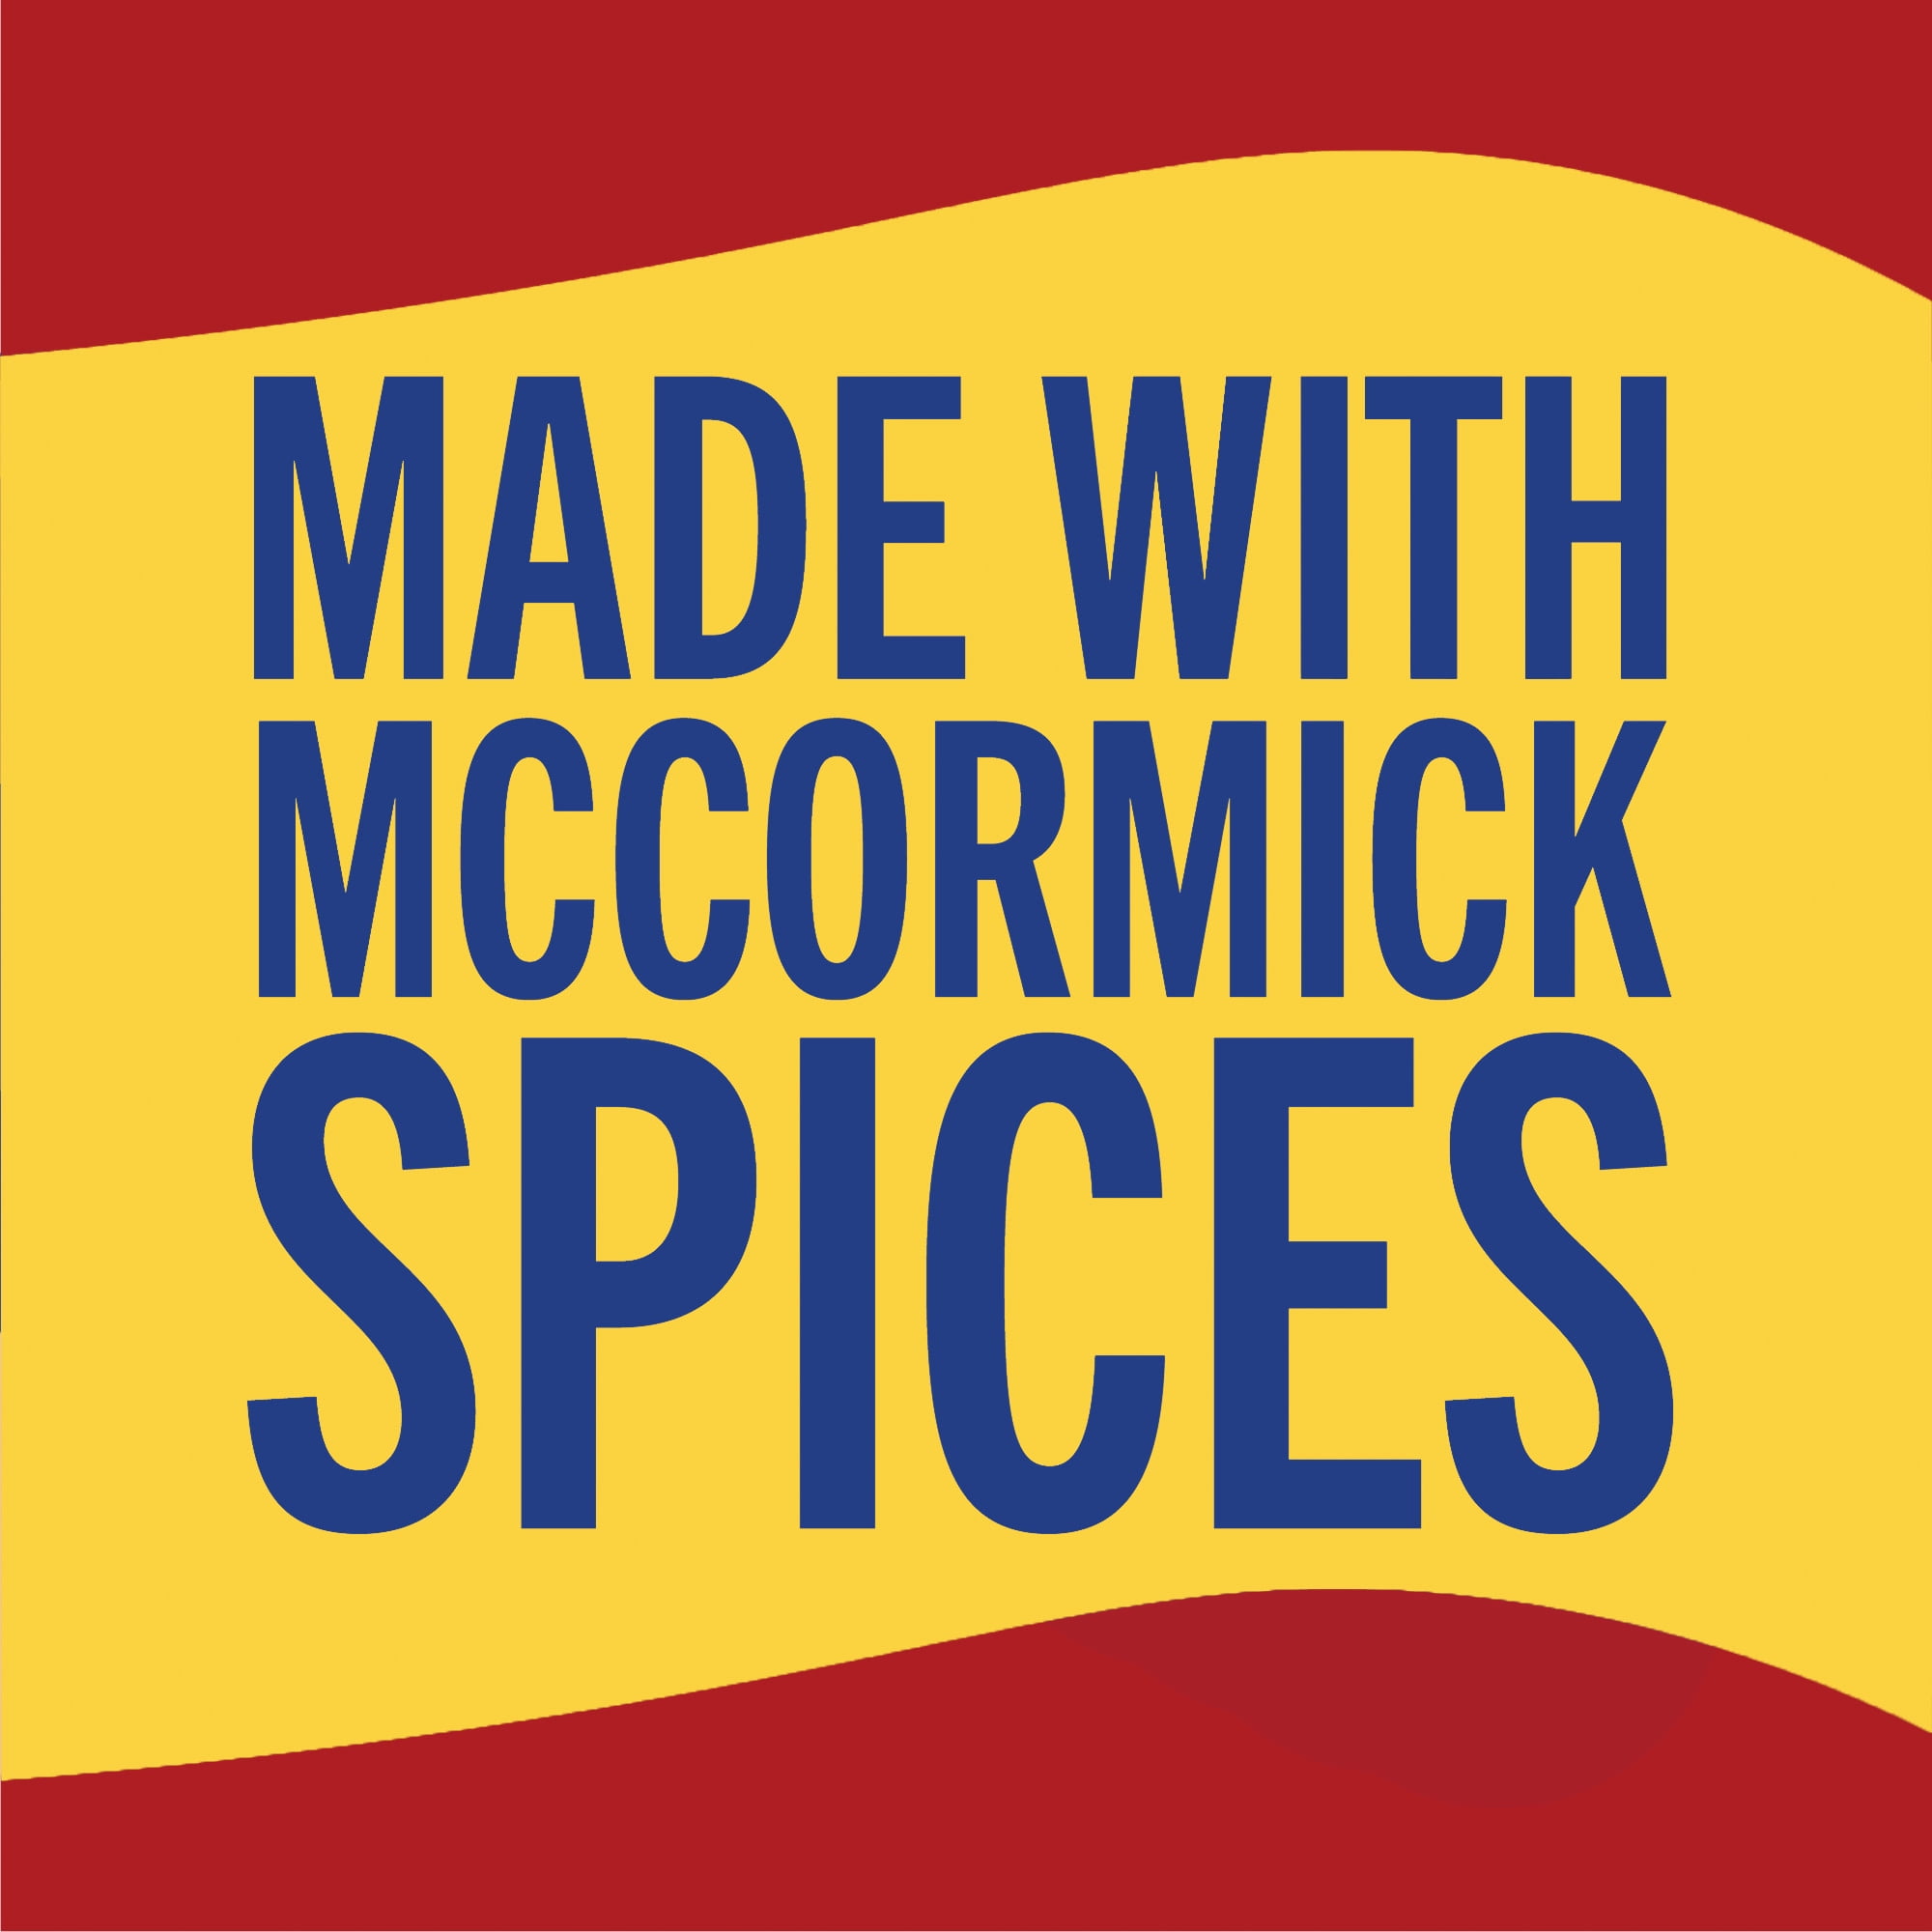 McCormick® Bag 'n Season® Pork Chops Cooking & Seasoning Mix, 1.06 oz –  Shop McCormick